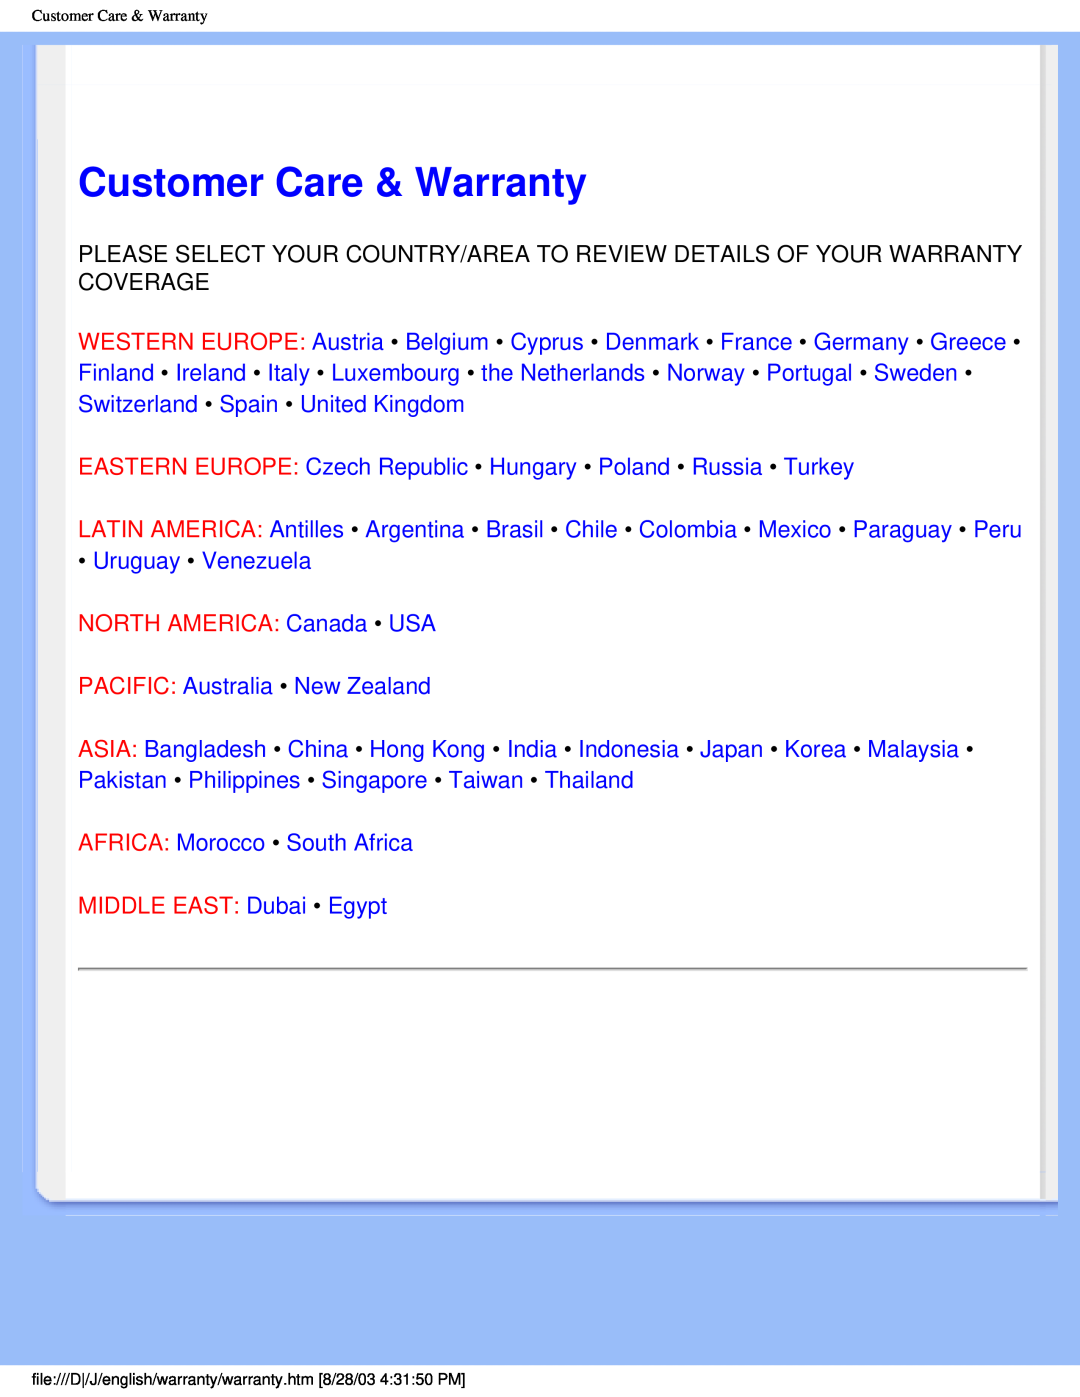 Philips 200P4 user manual Customer Care & Warranty, NORTH AMERICA Canada USA, MIDDLE EAST Dubai Egypt 